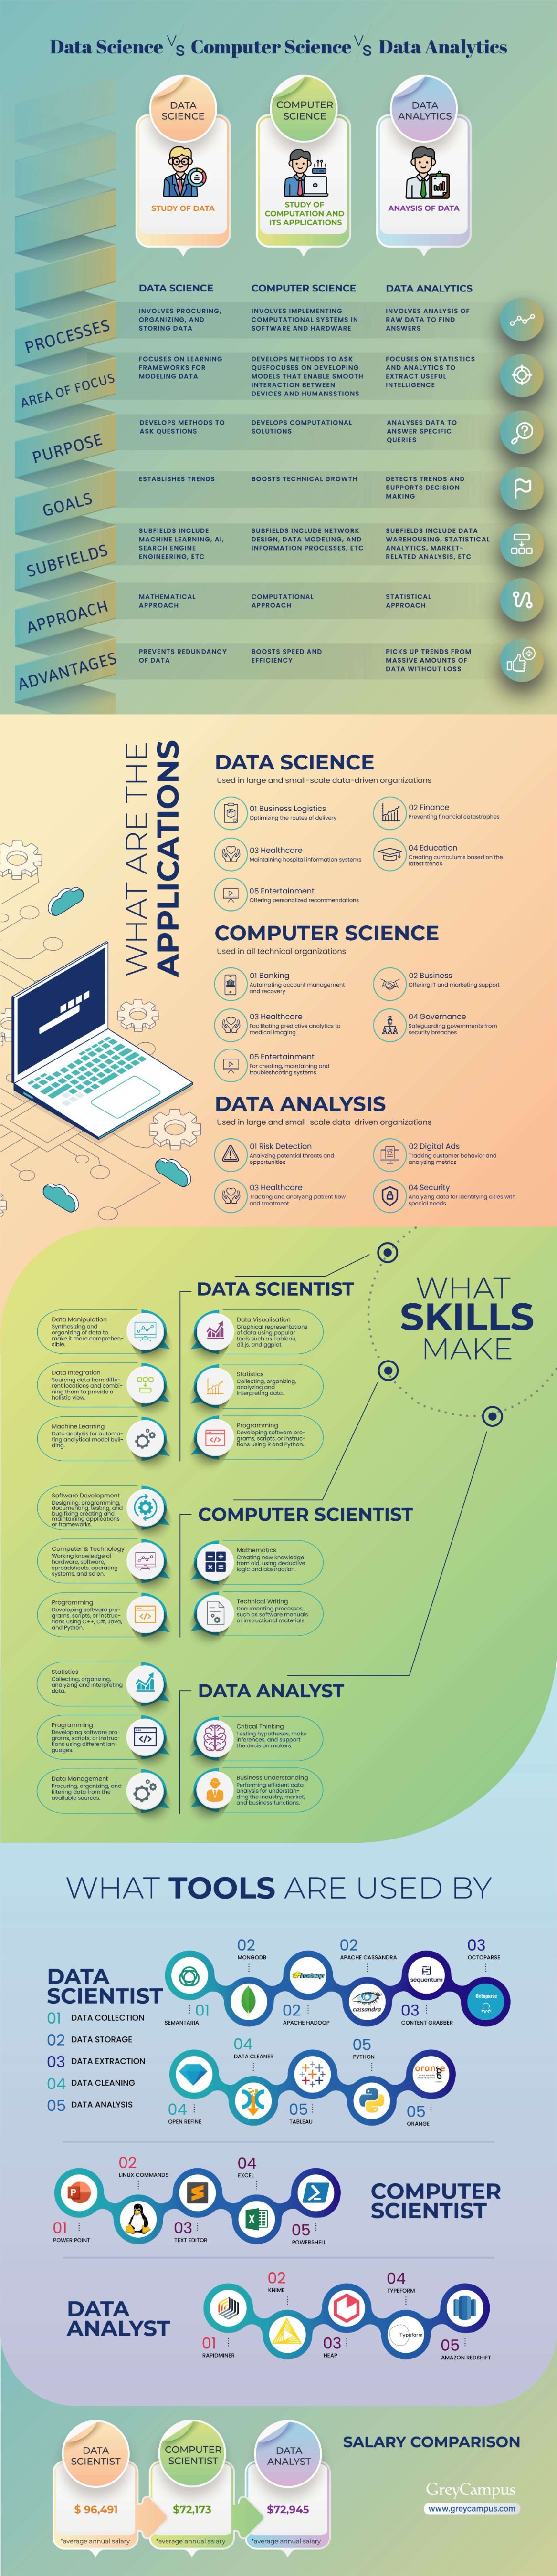 Data Science vs Computer Science vs Data Analytics